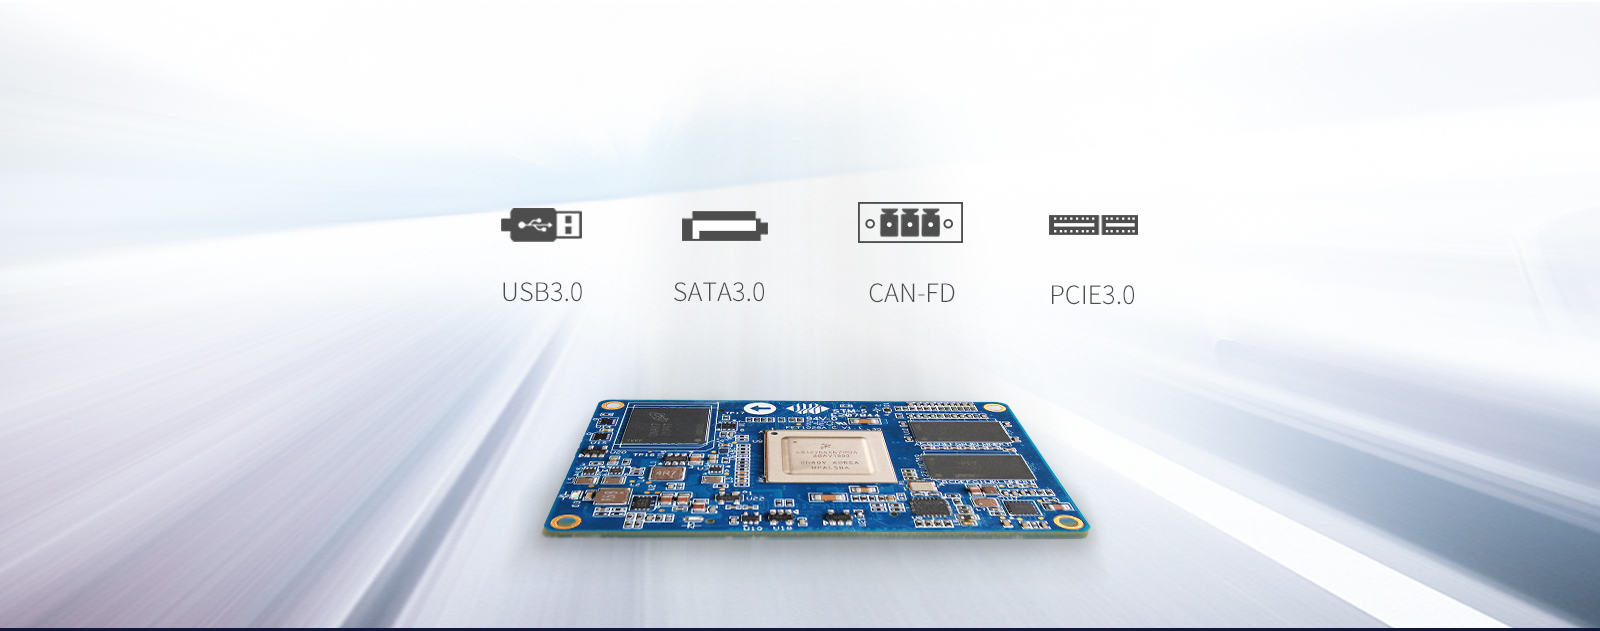 NXP ARM LS1028A single board computer USB3.0, SATA3.0, PCIe3.0, CAN FD 